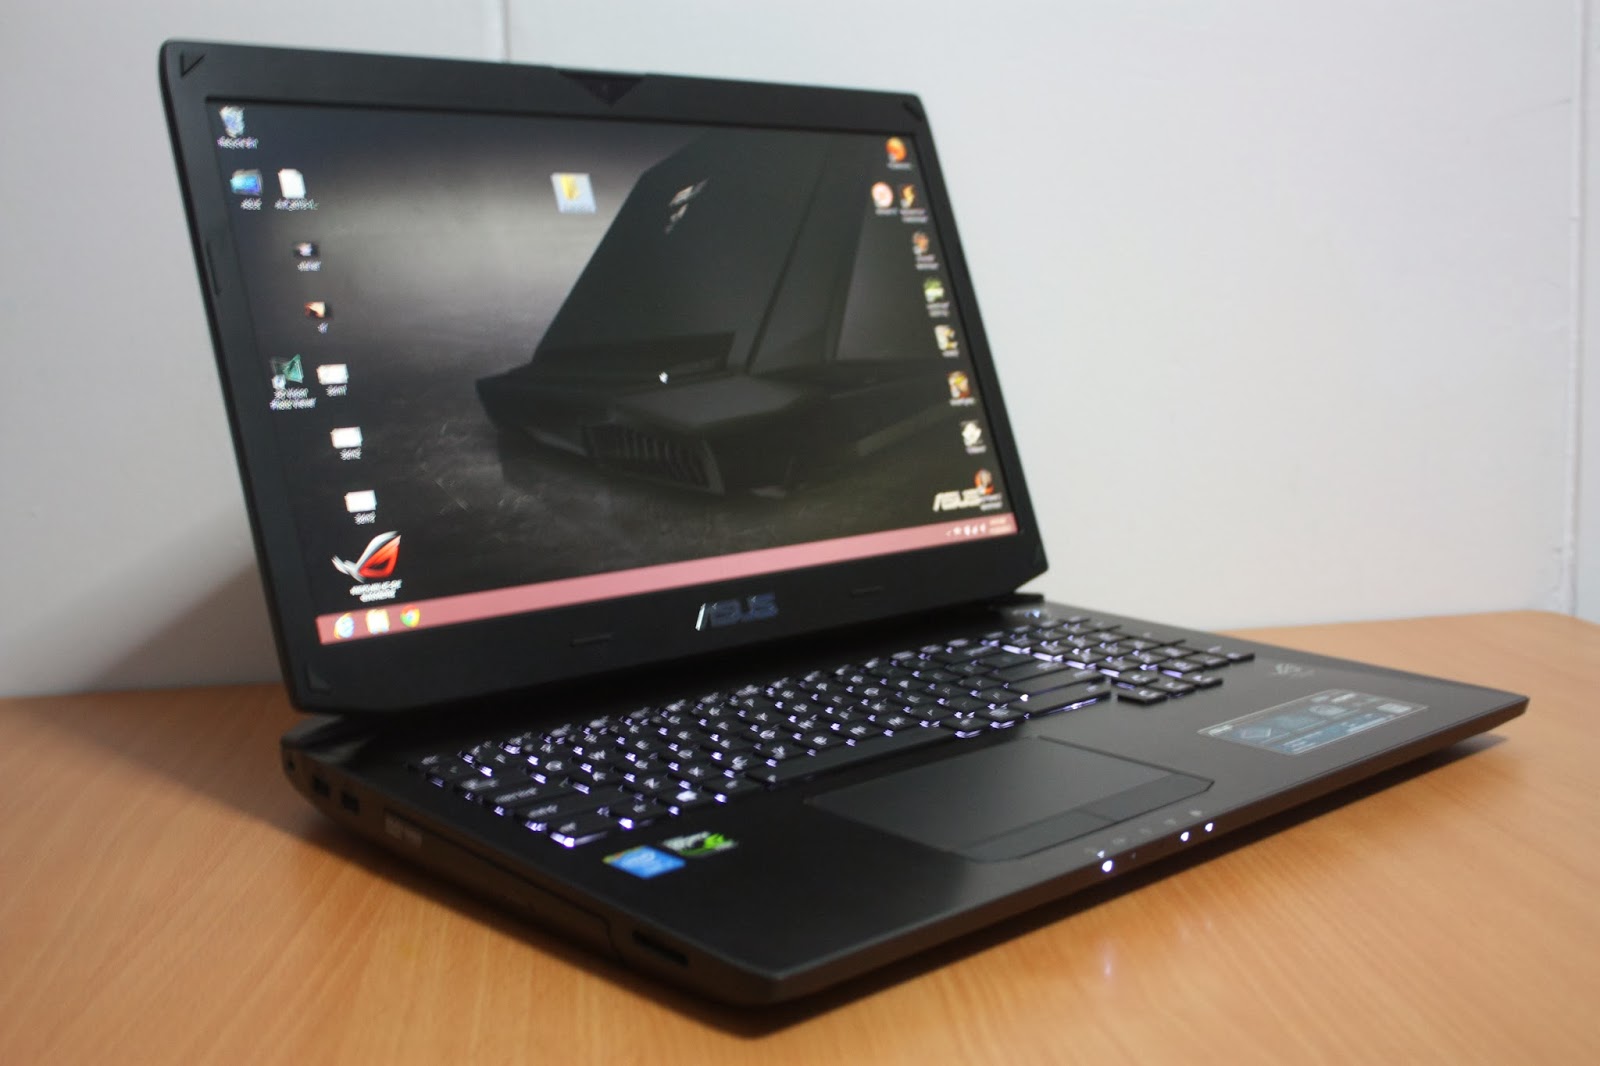 Review of ASUS ROG G750J Gaming Laptop Will it meet 